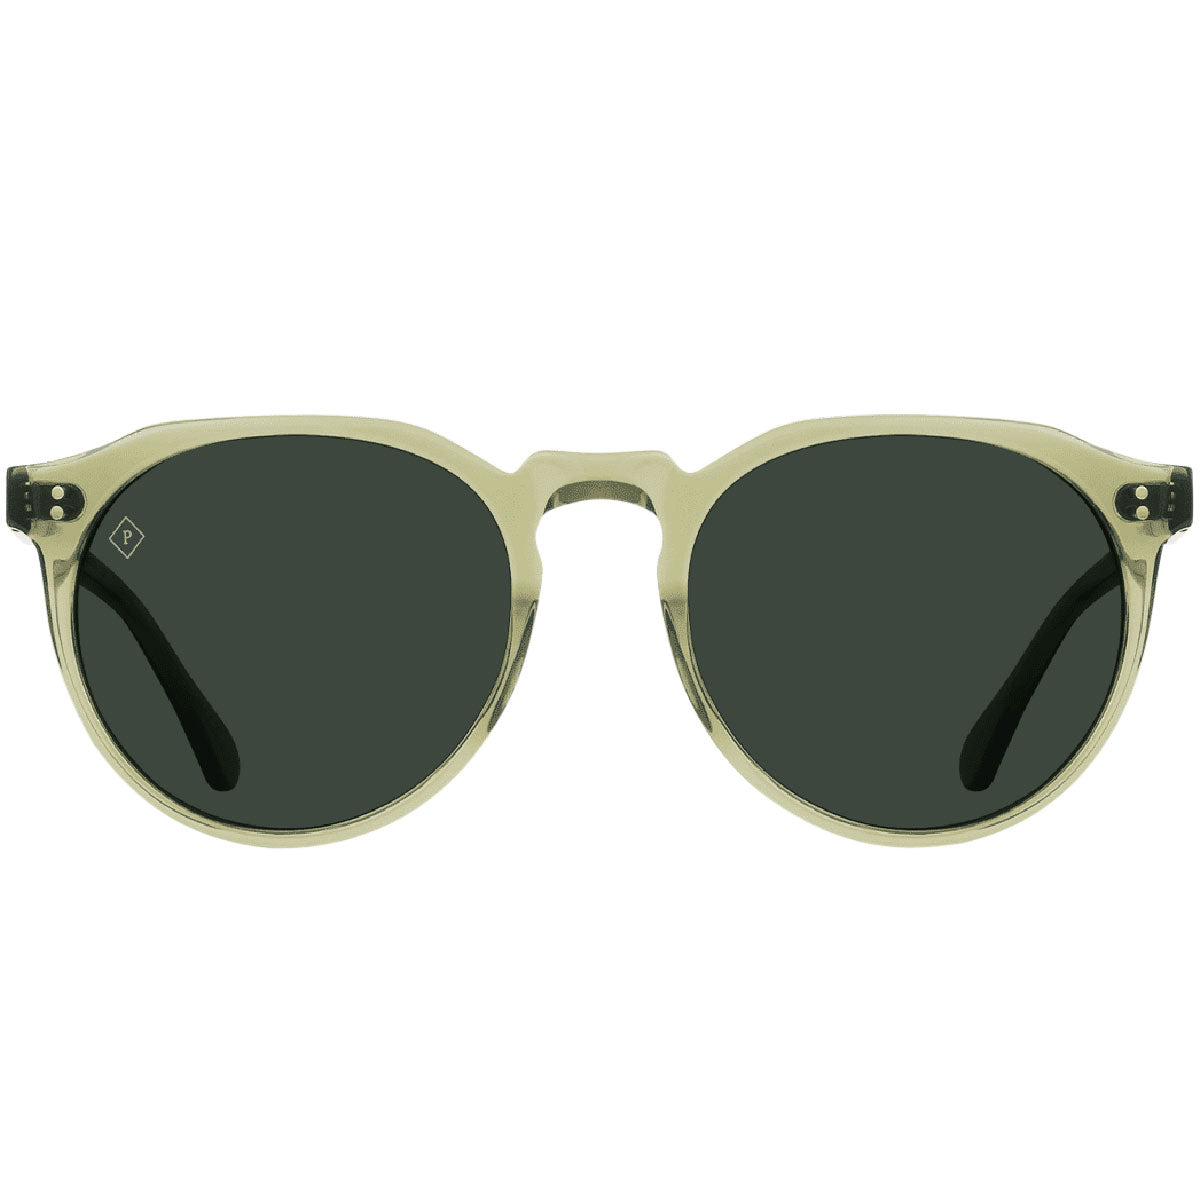 Raen Remmy 52 Sunglasses - Cambria/Green Polarized image 2